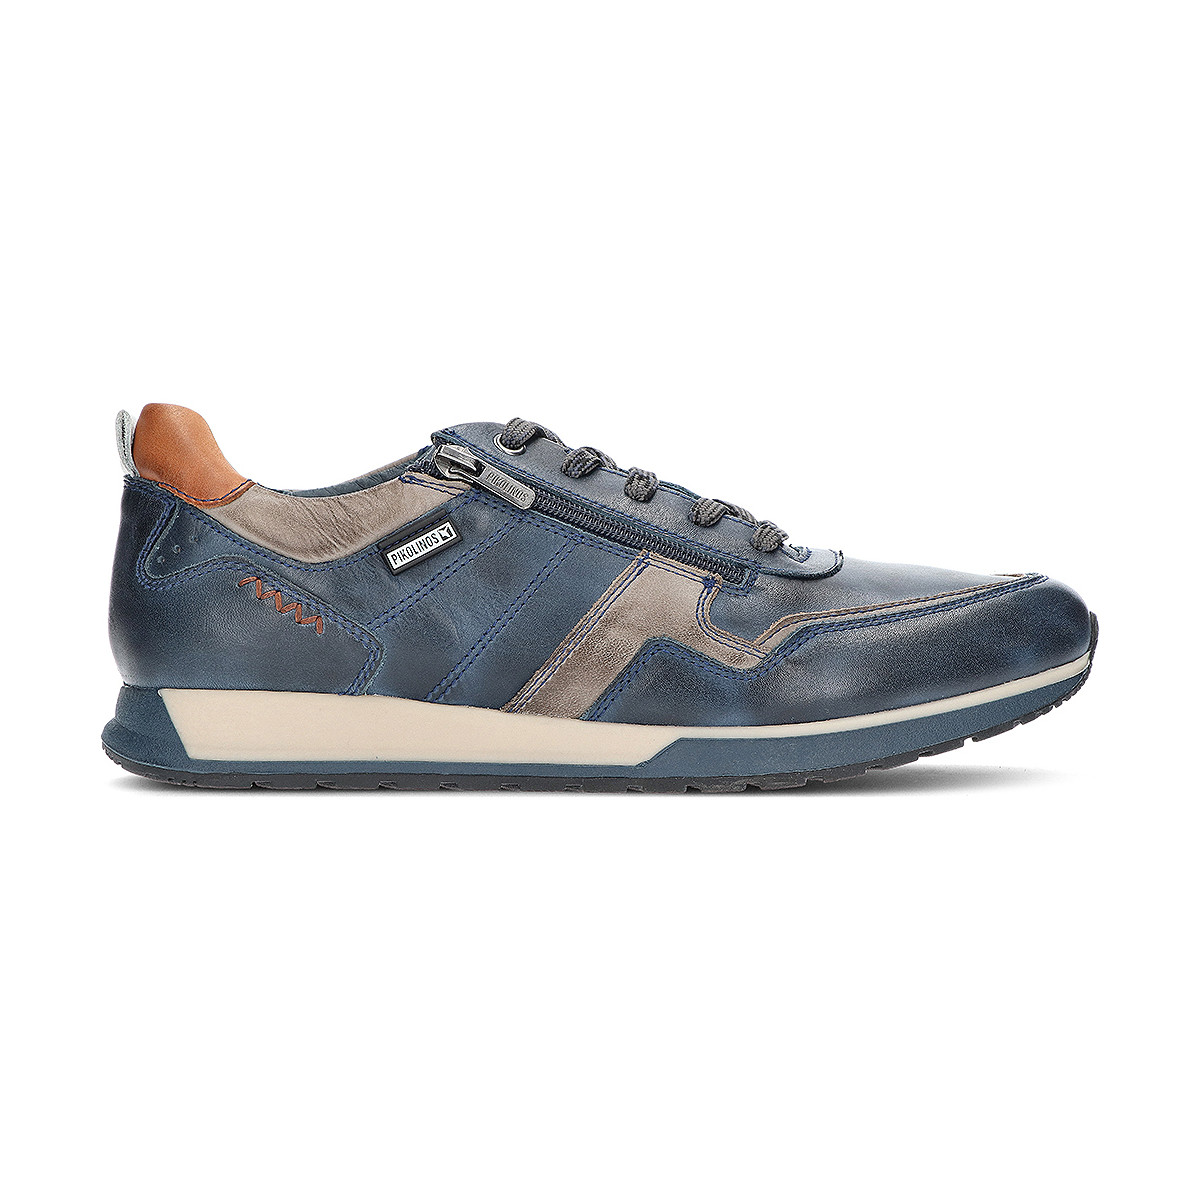 Schuhe Herren Sneaker Low Pikolinos CAMBIL M5N-6010C3 SCHUHE Blau